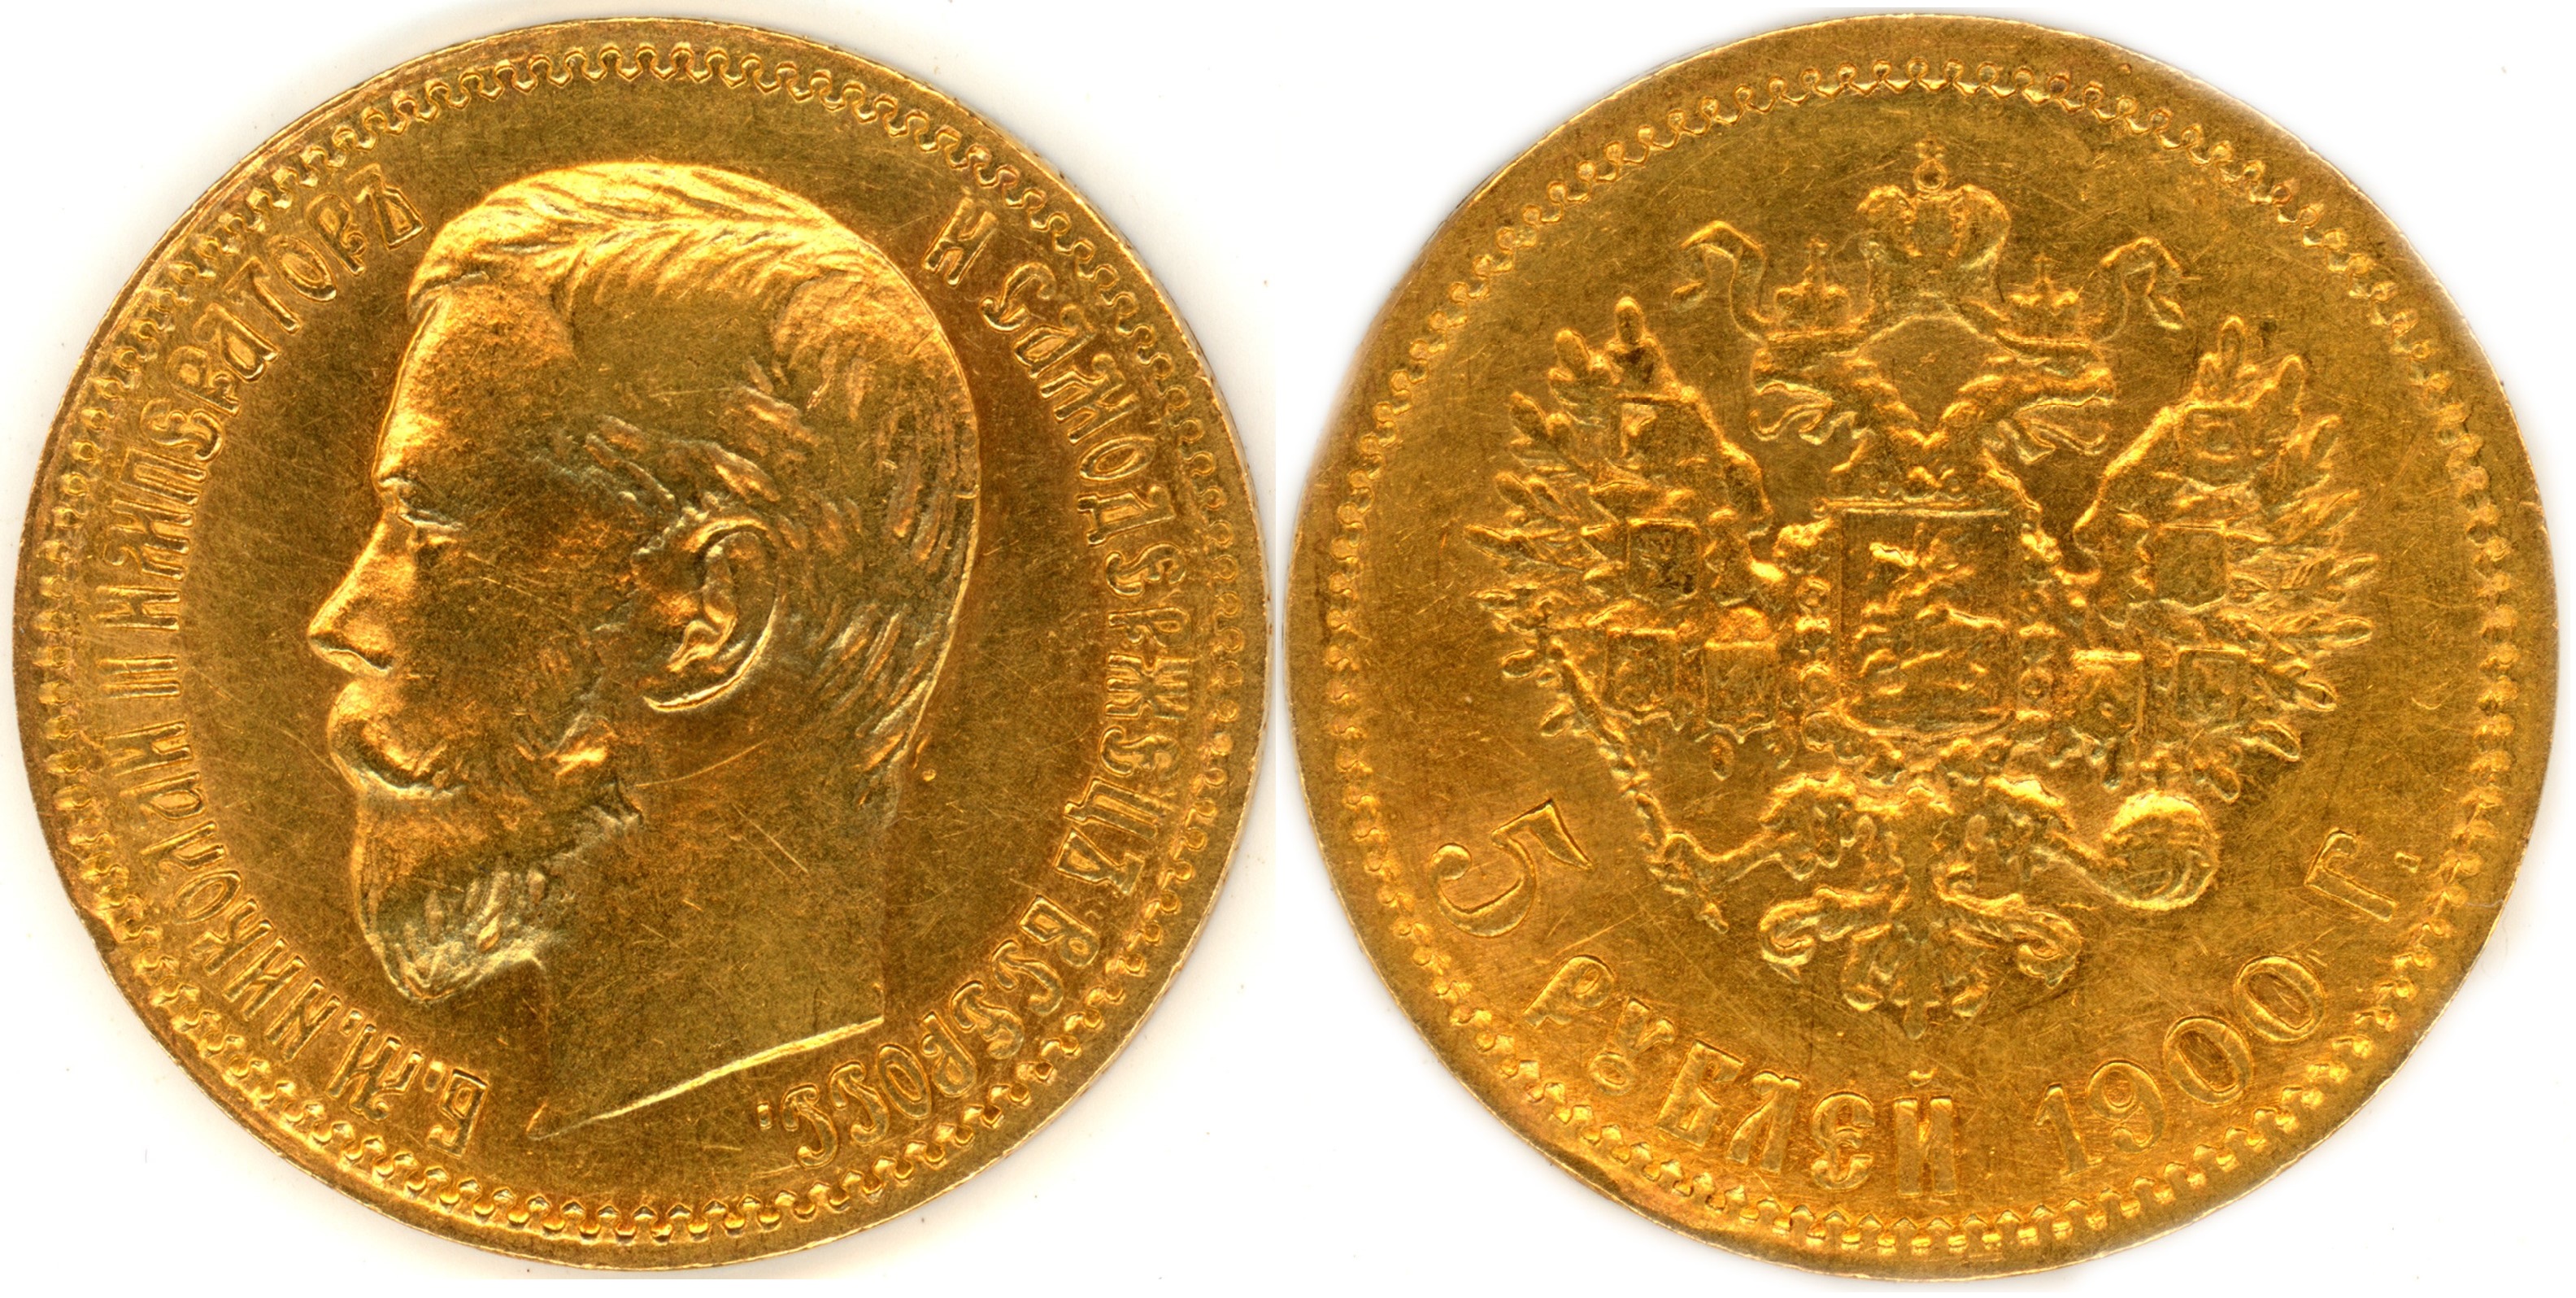 5 руб золото. 7рублей 50копеек 1897. 7 Рублей 50 копеек 1897 года.